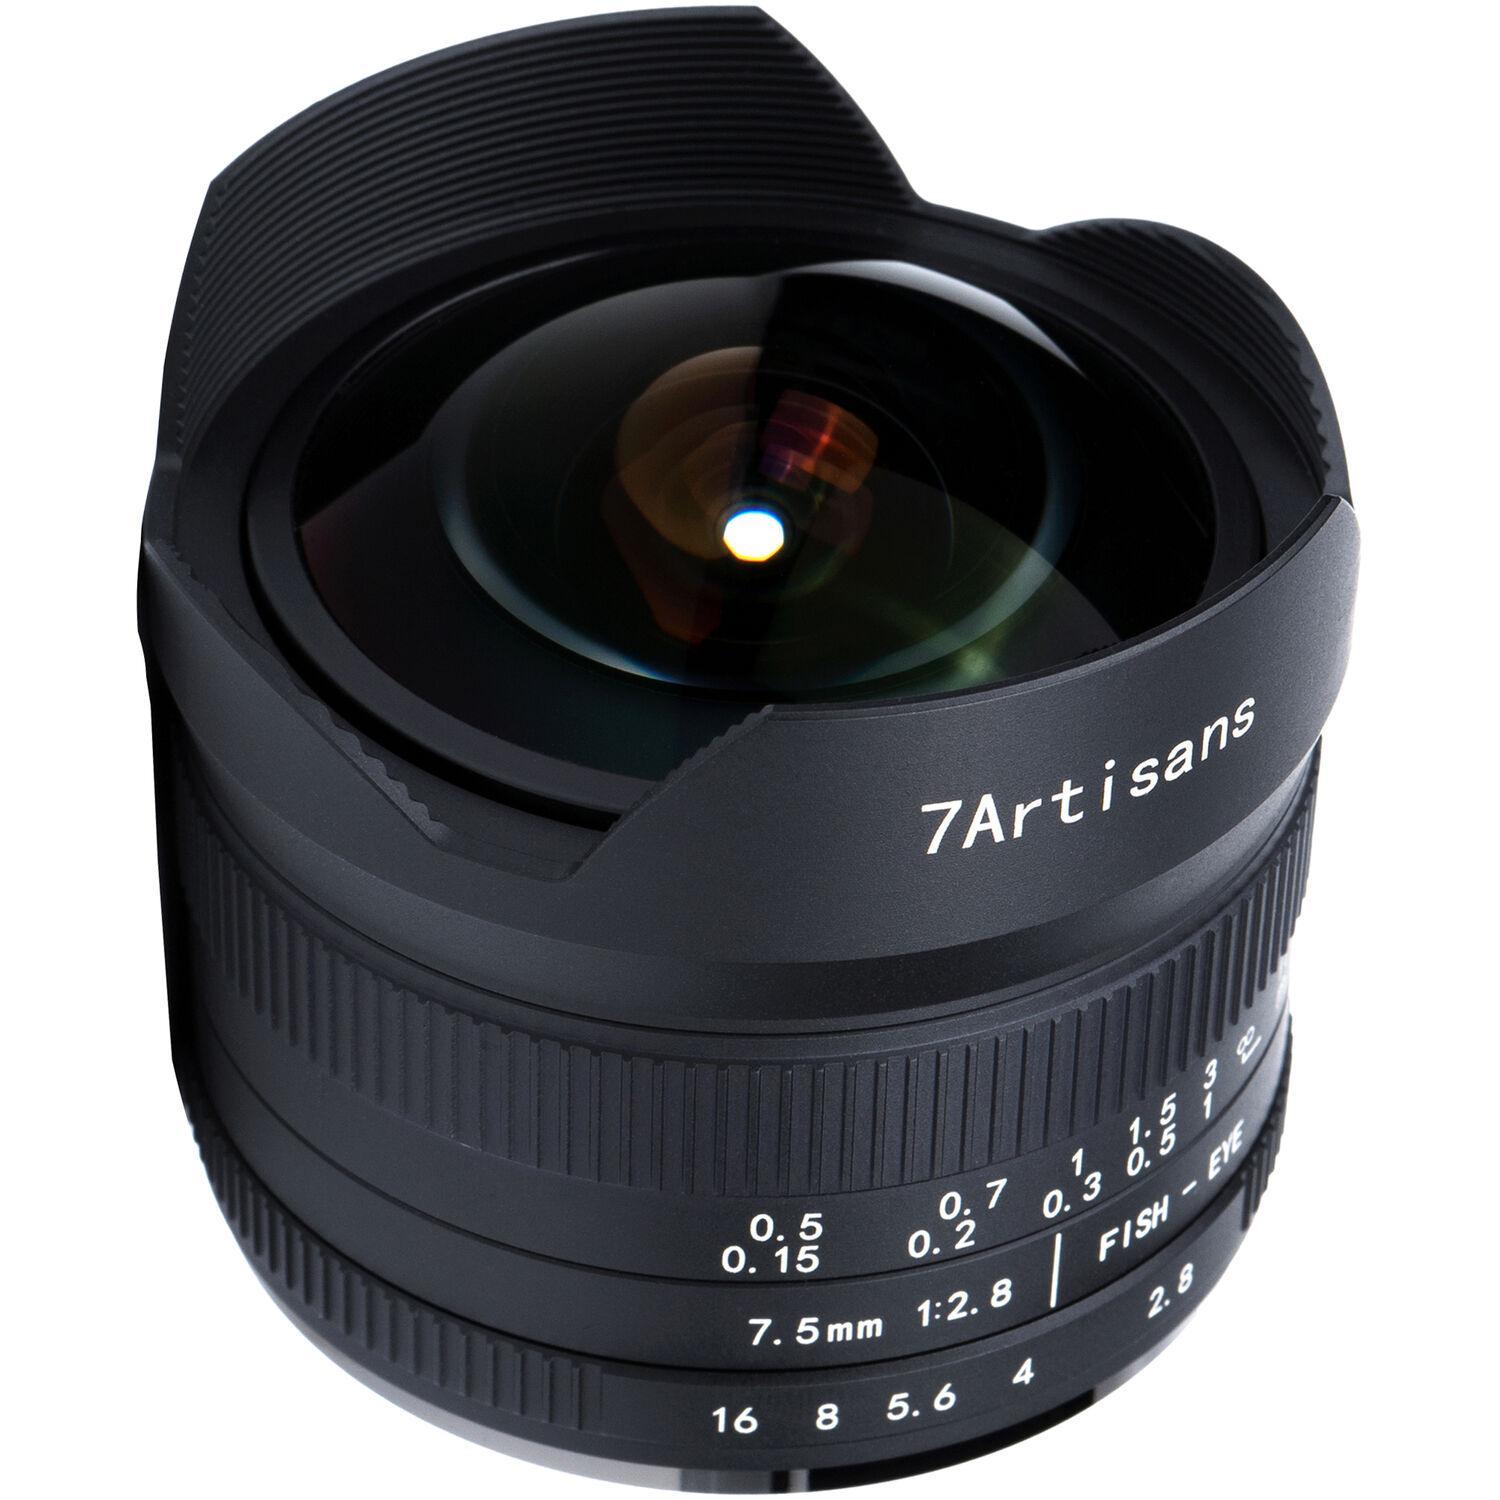 7artisans 7.5mm f/2.8 to f/22 II Lens for Nikon (Z Mount)